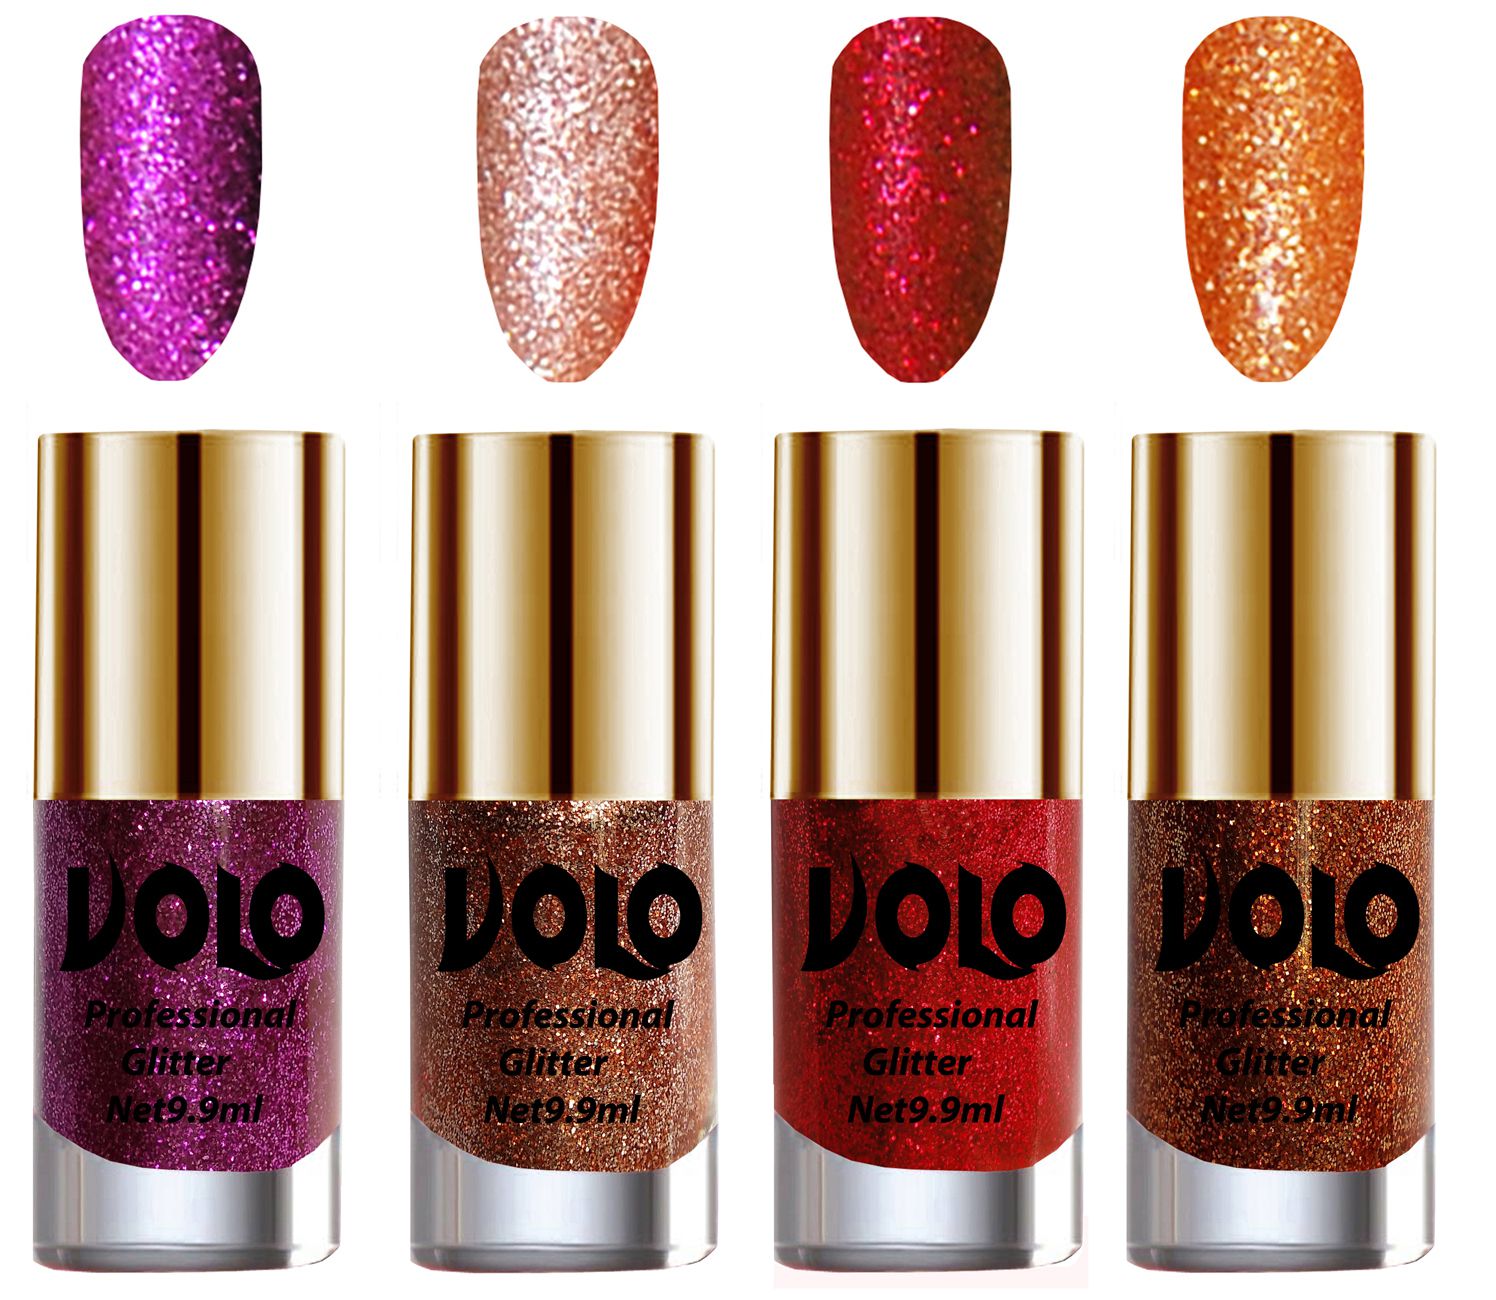     			VOLO Professionally Used Glitter Shine Nail Polish Purple,Peach,Red Orange Pack of 4 39 mL